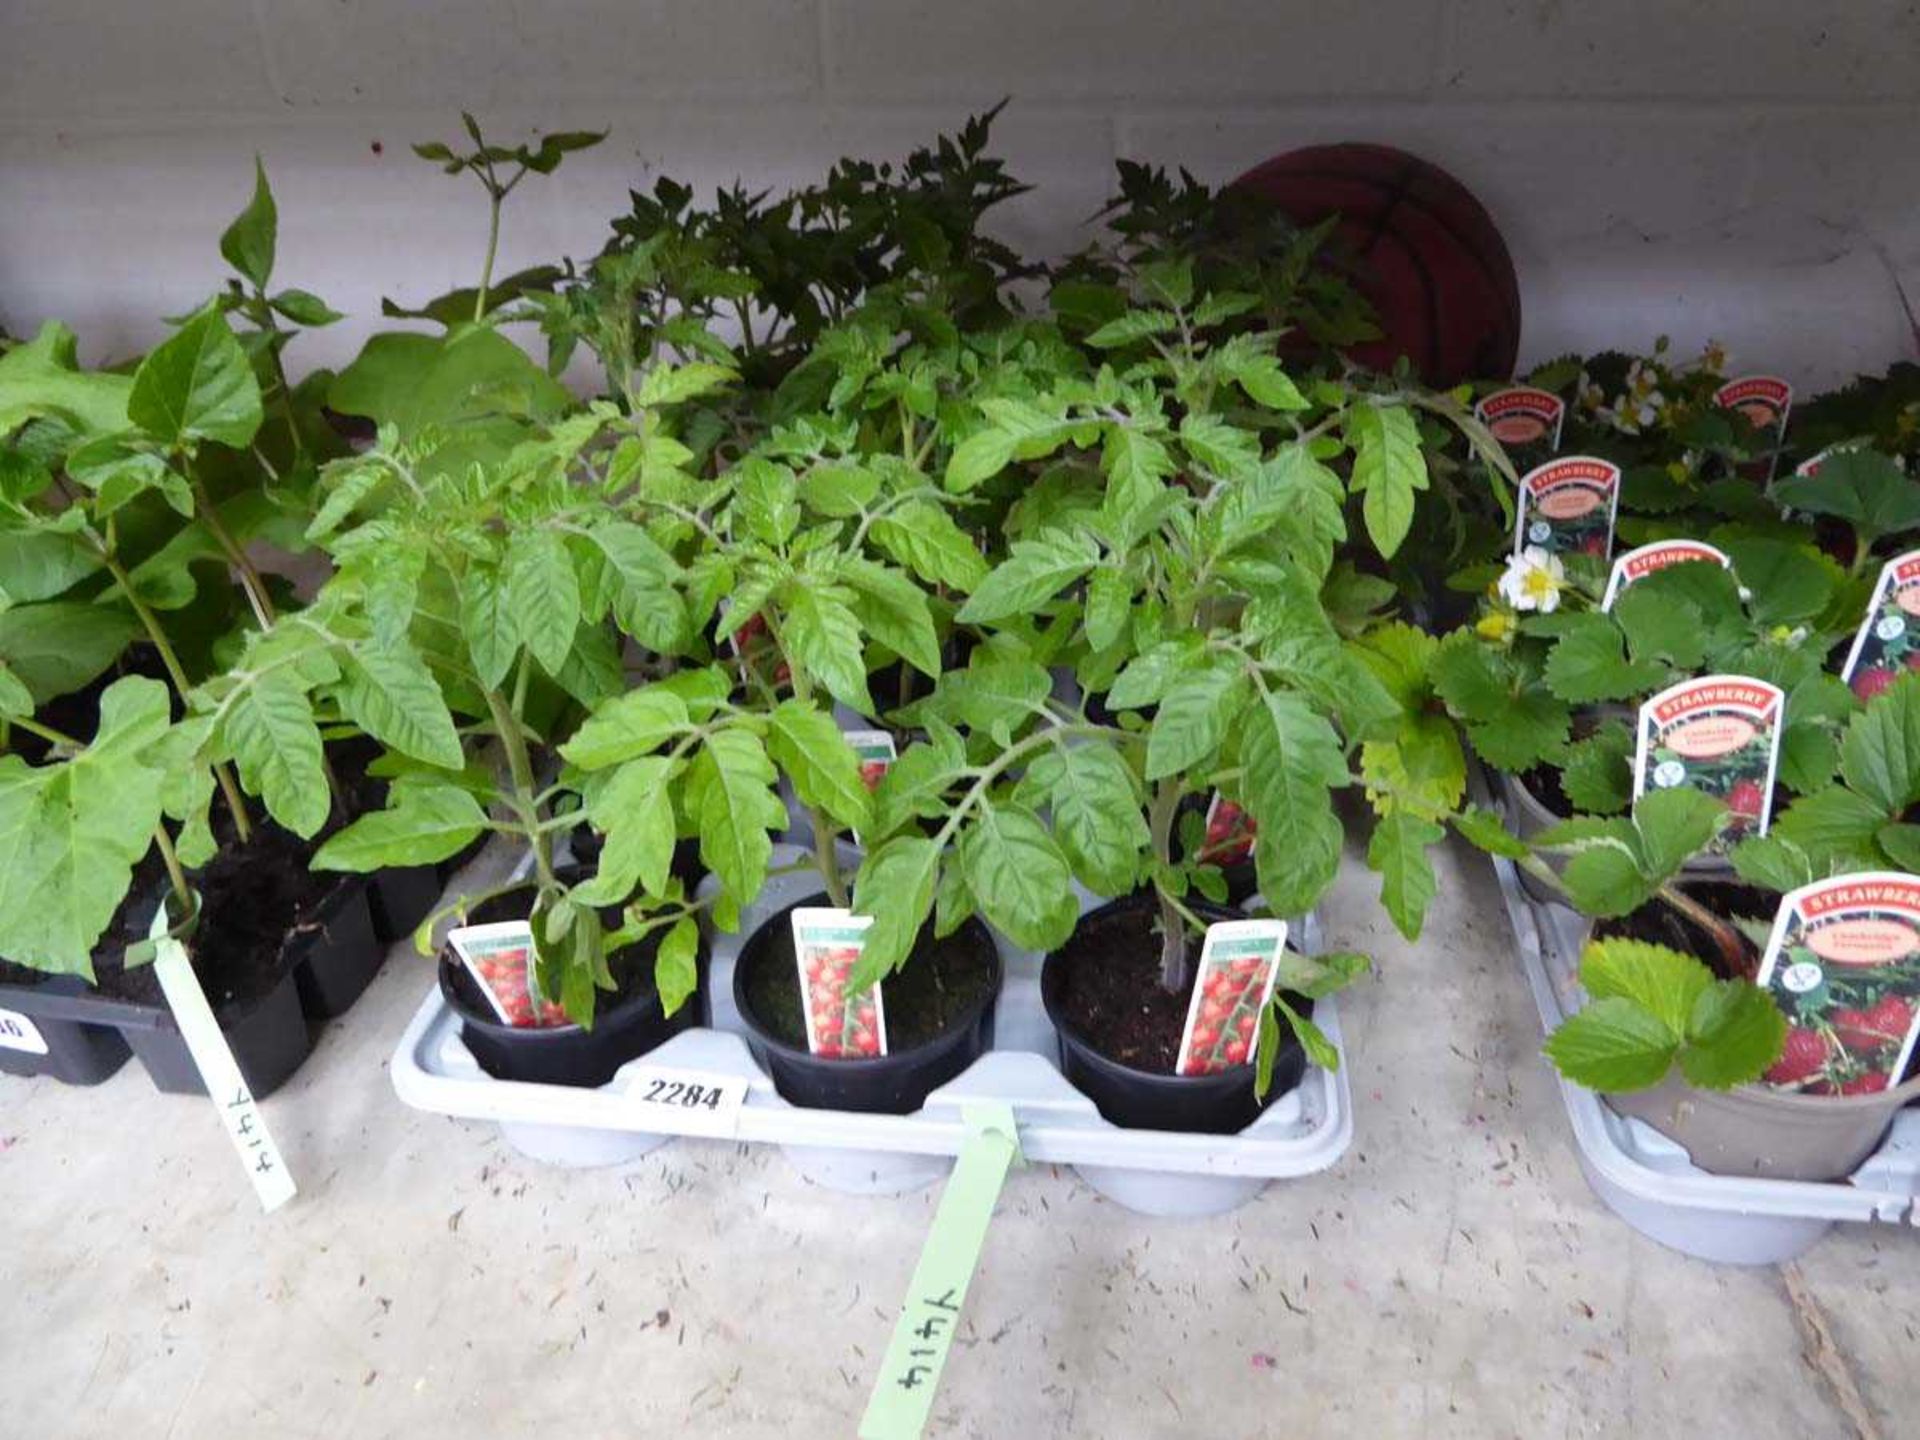 Tray containing 15 Gardeners Delight tomato plants